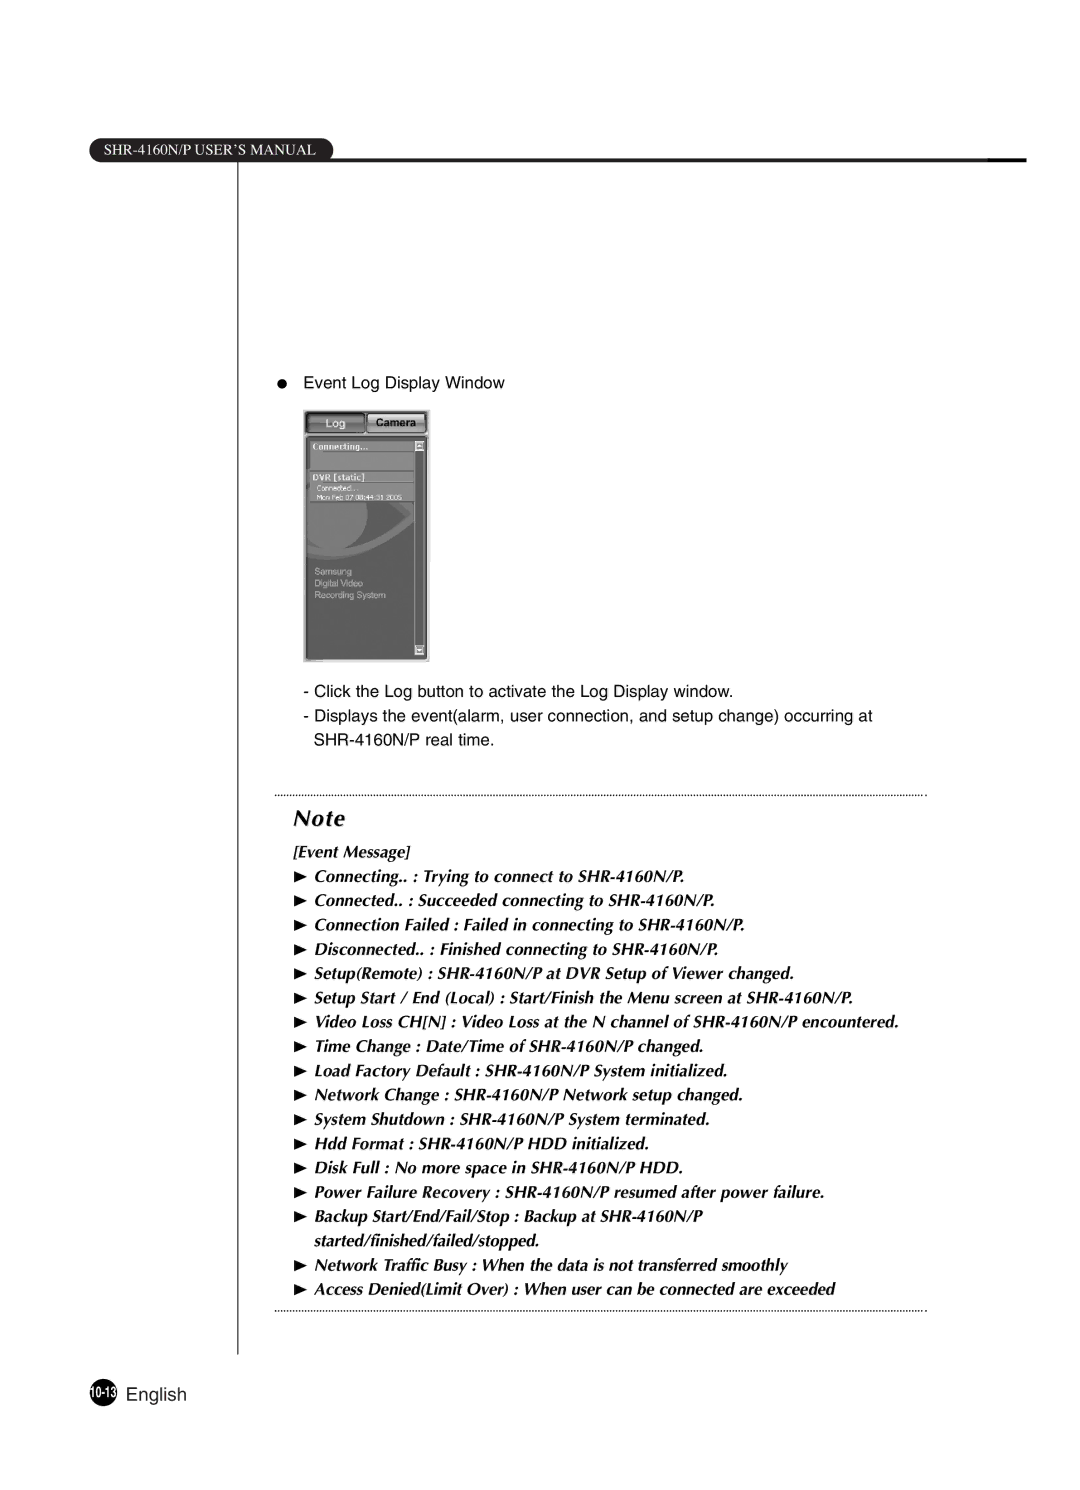 Samsung SHR-4160P manual 10-13English 